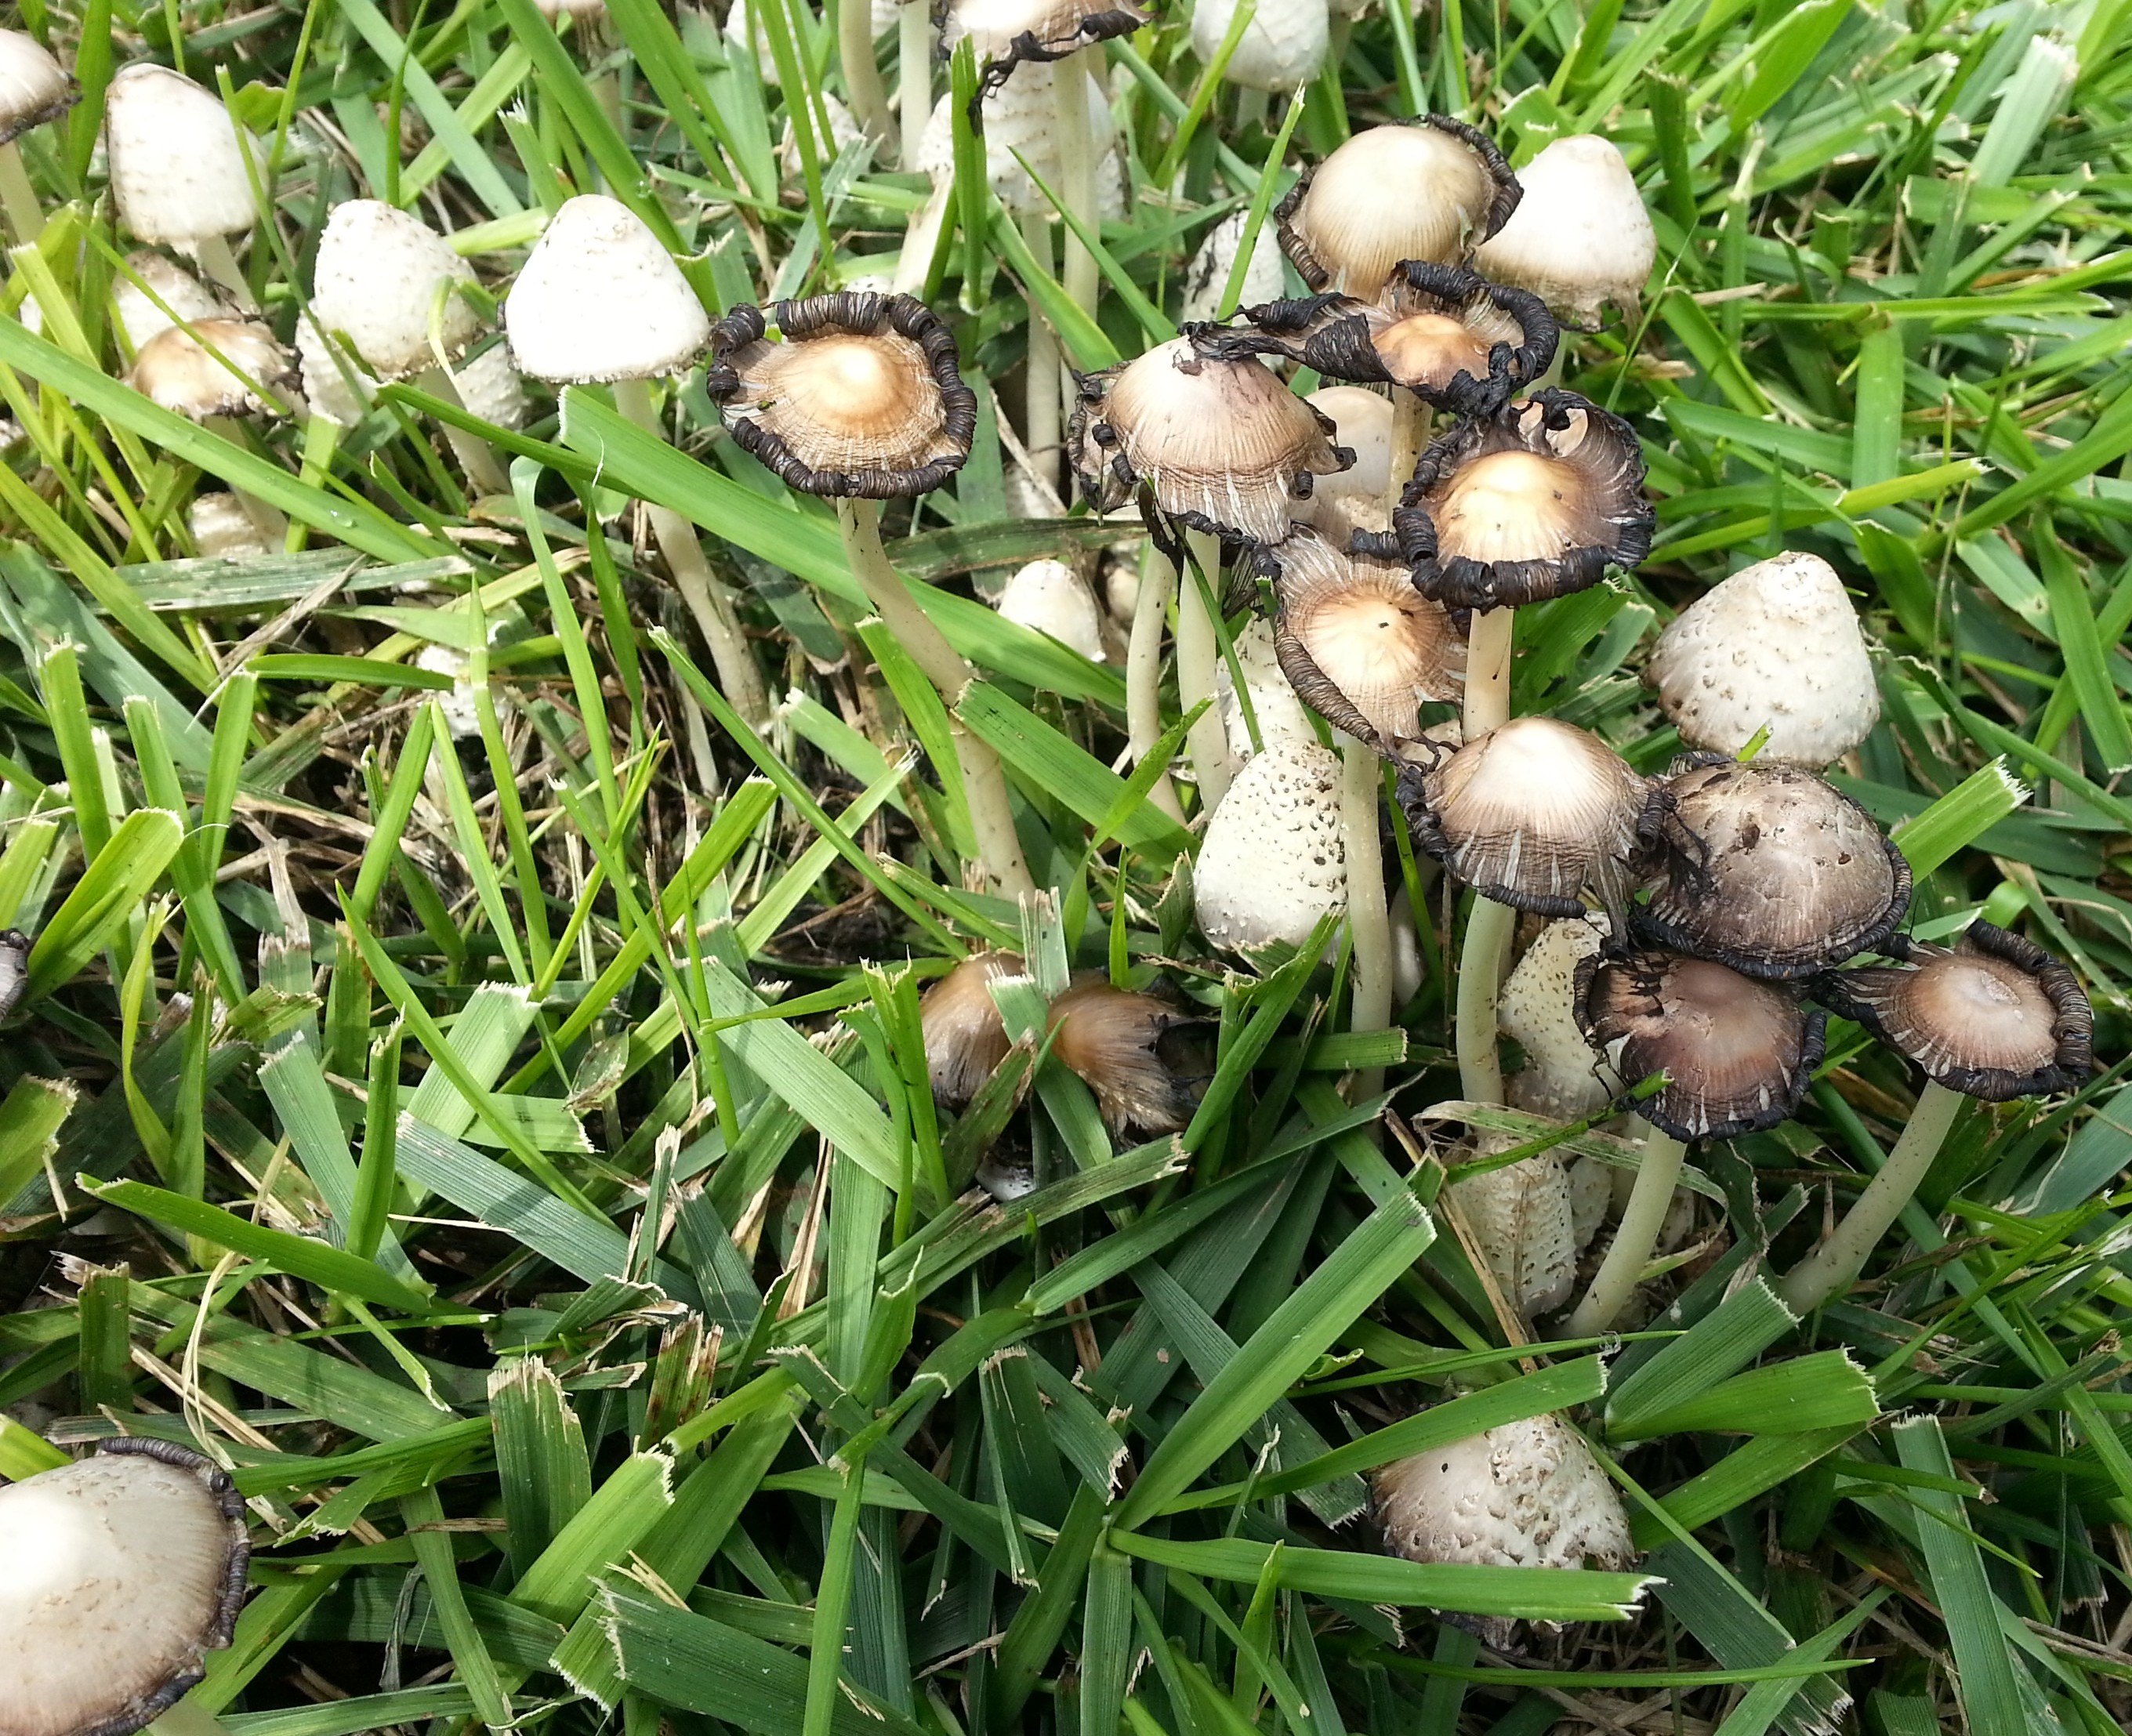 Harmful Wild Mushrooms Infest Salina Lawns - The Salina Post